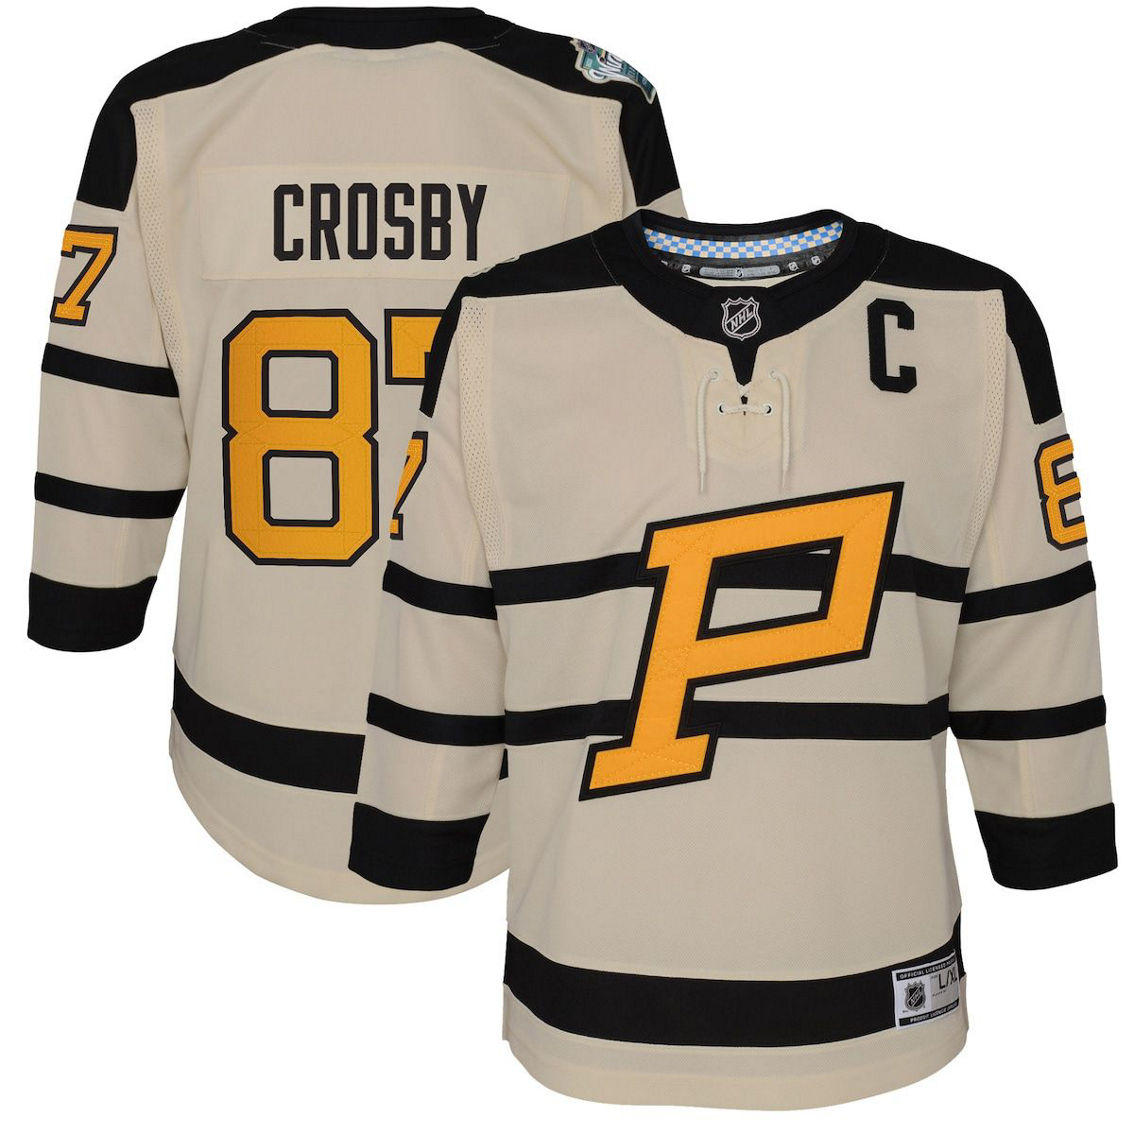 Pittsburgh Penguins Jerseys & Apparel: Shop Gear & Merchandise!